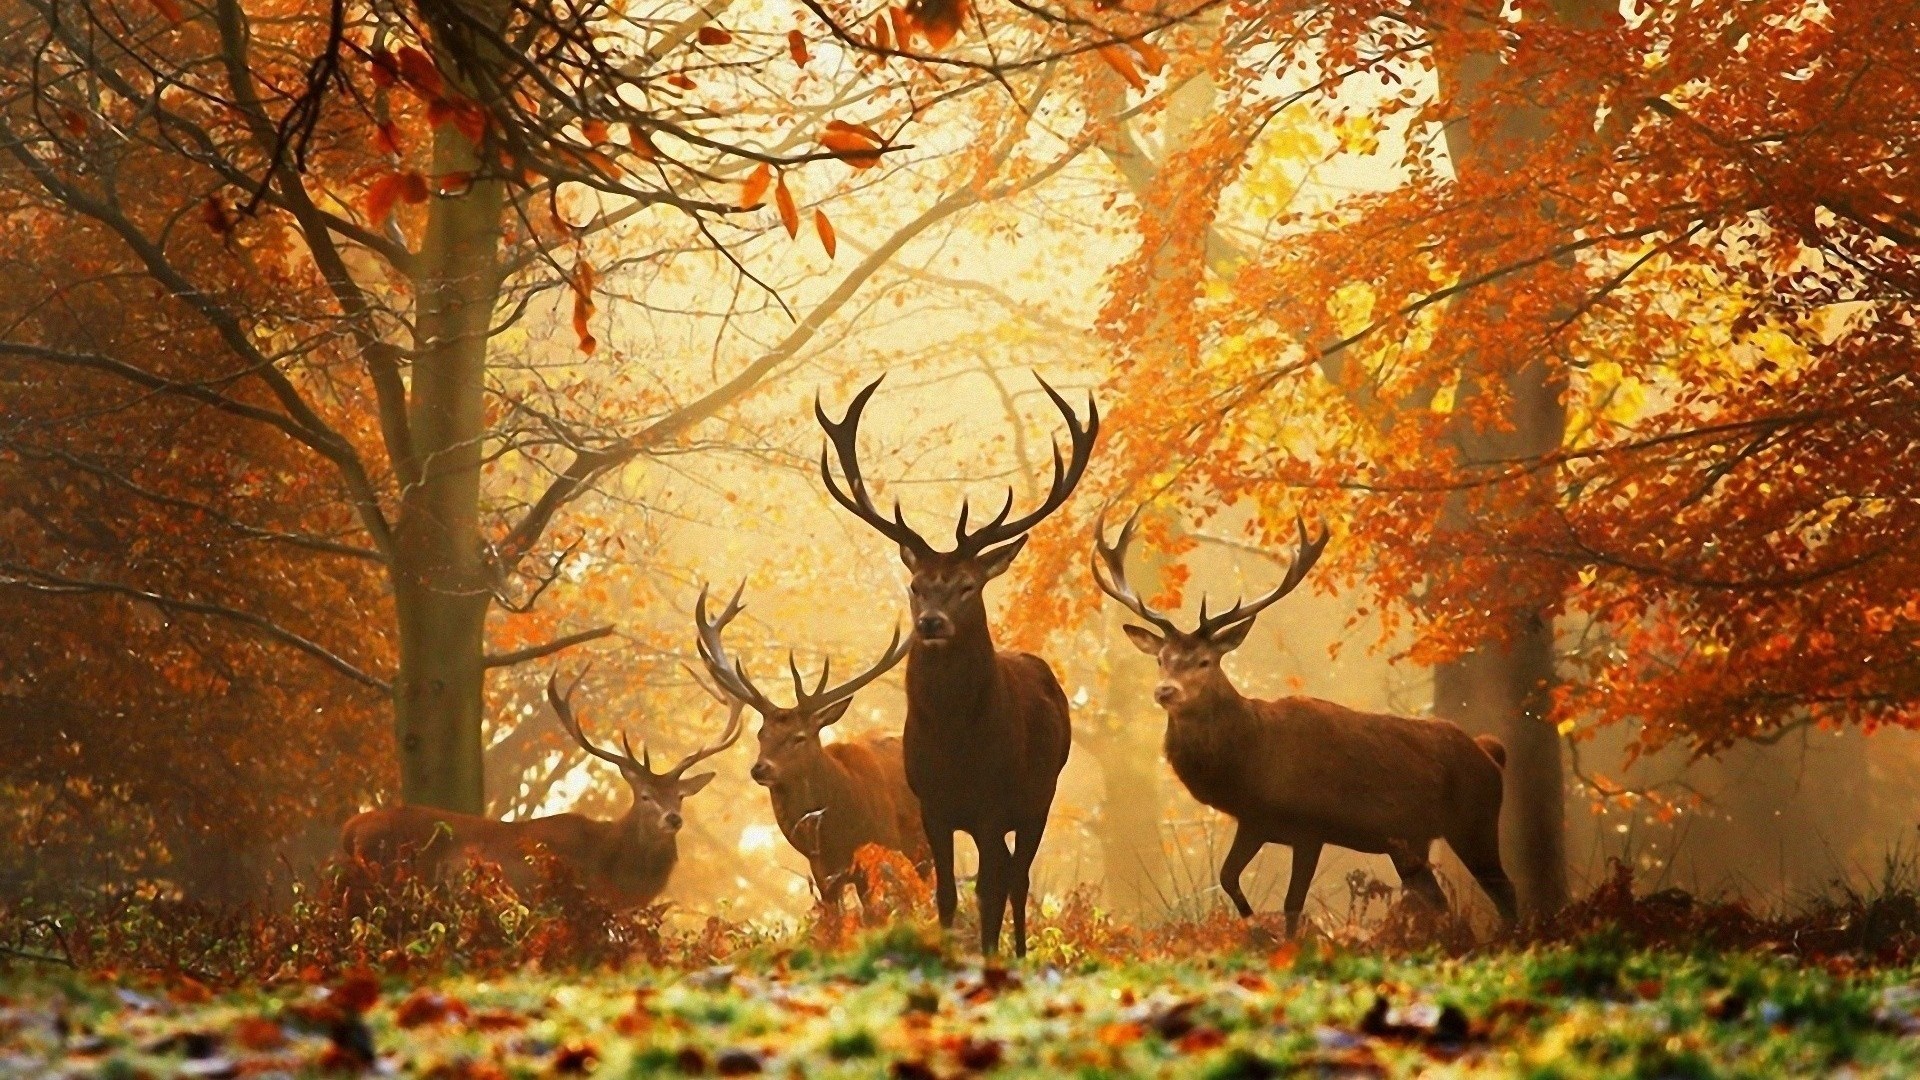 General 1920x1080 landscape wildlife deer mammals fall forest mist fallen leaves orange stags antlers